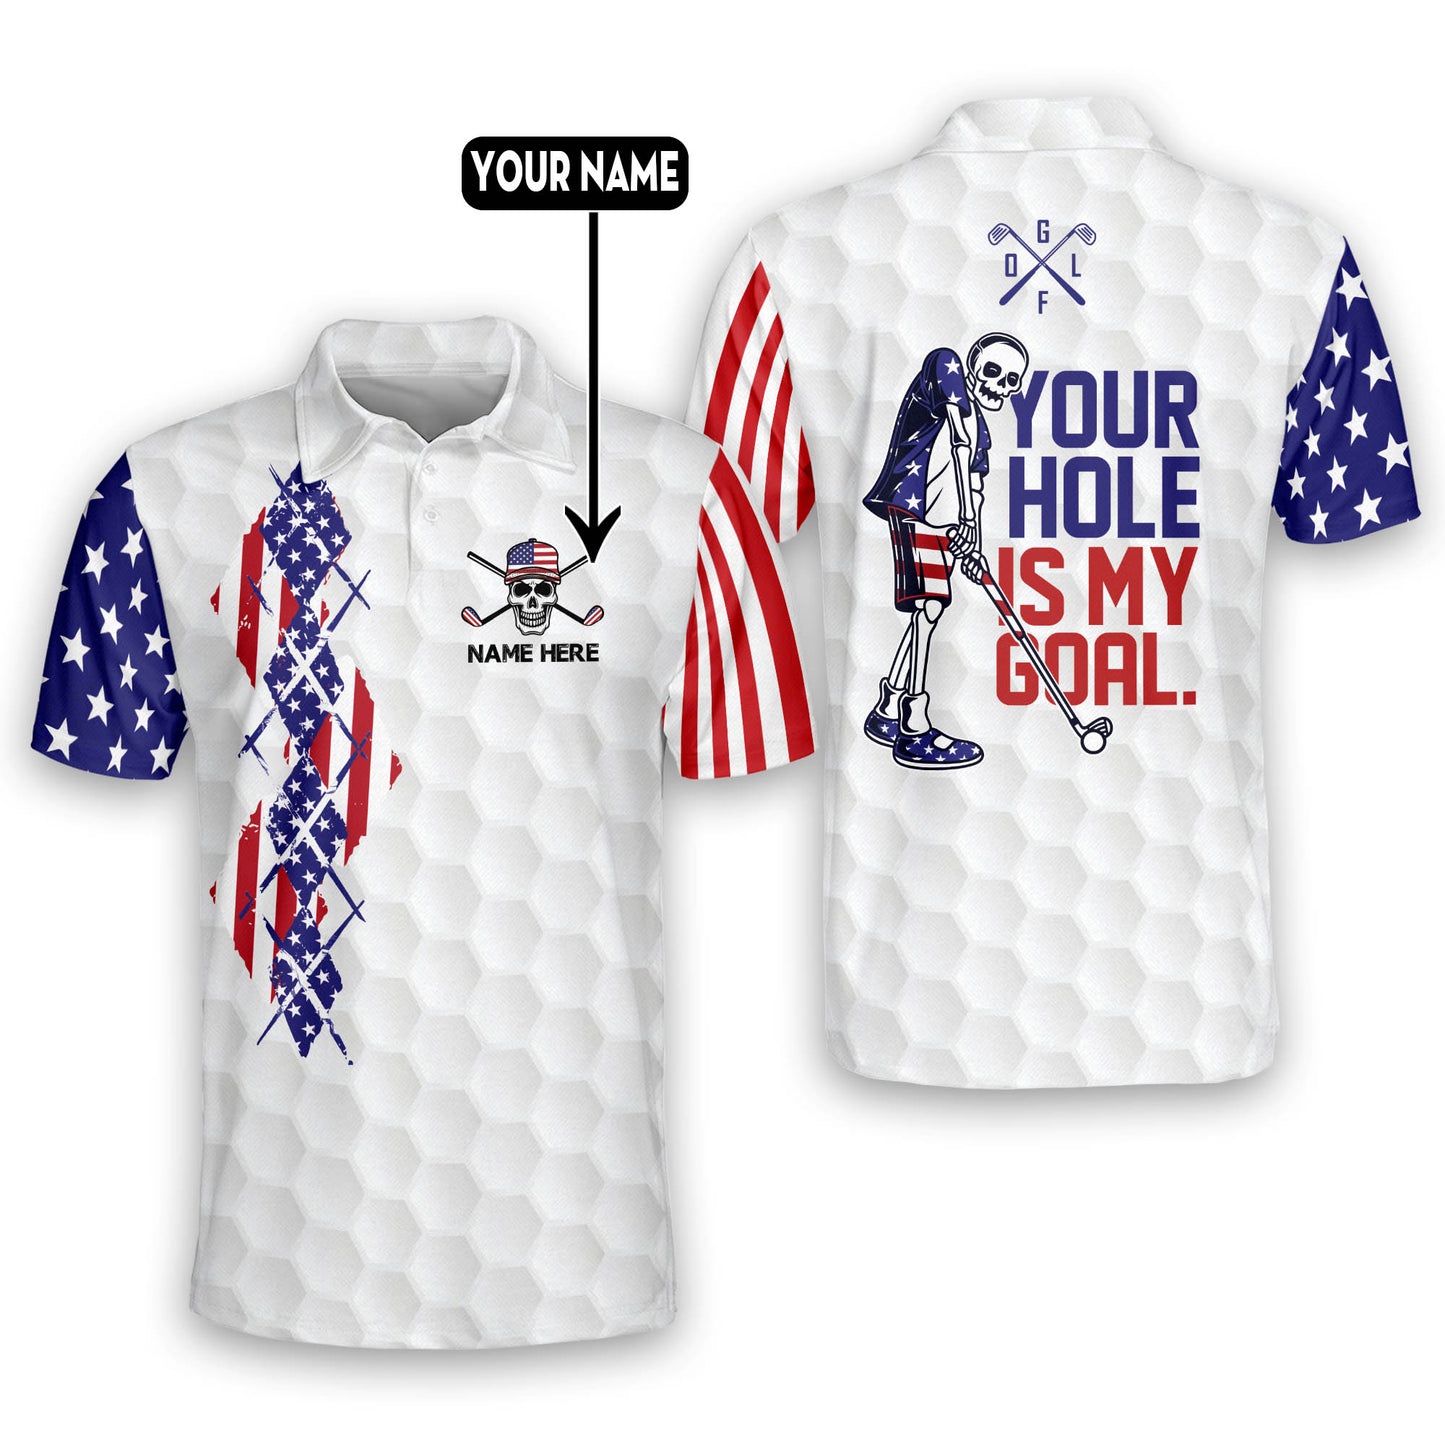 Your Hole Is My Goal Golf Polo Shirt GM0144